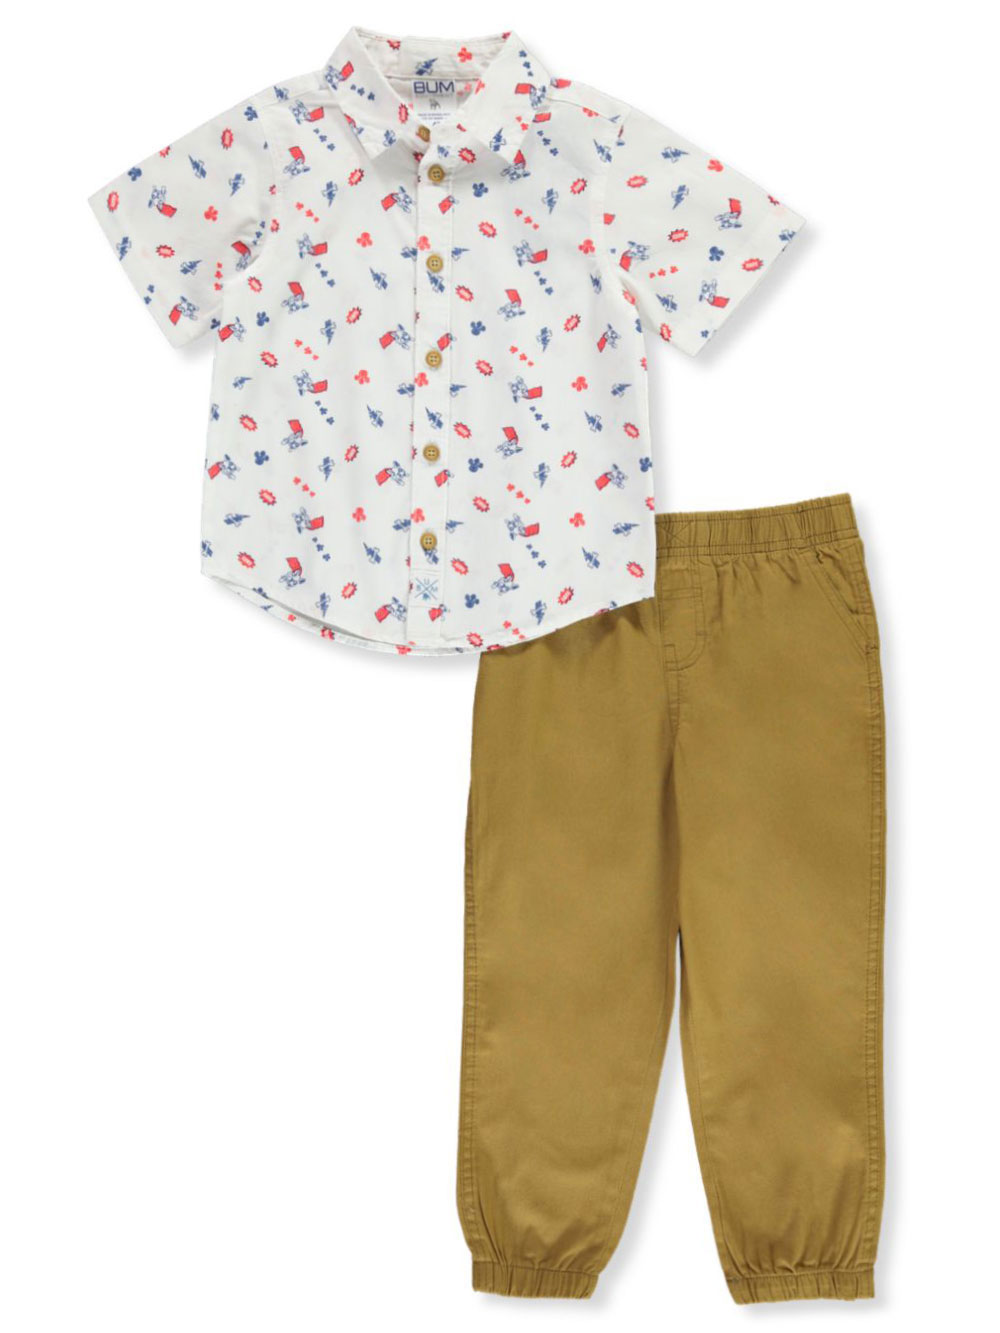 B.U.M Equipment Boys Short Sleeve Pajama Shirt /& Pants Cotton Sleepwear 2PC Set